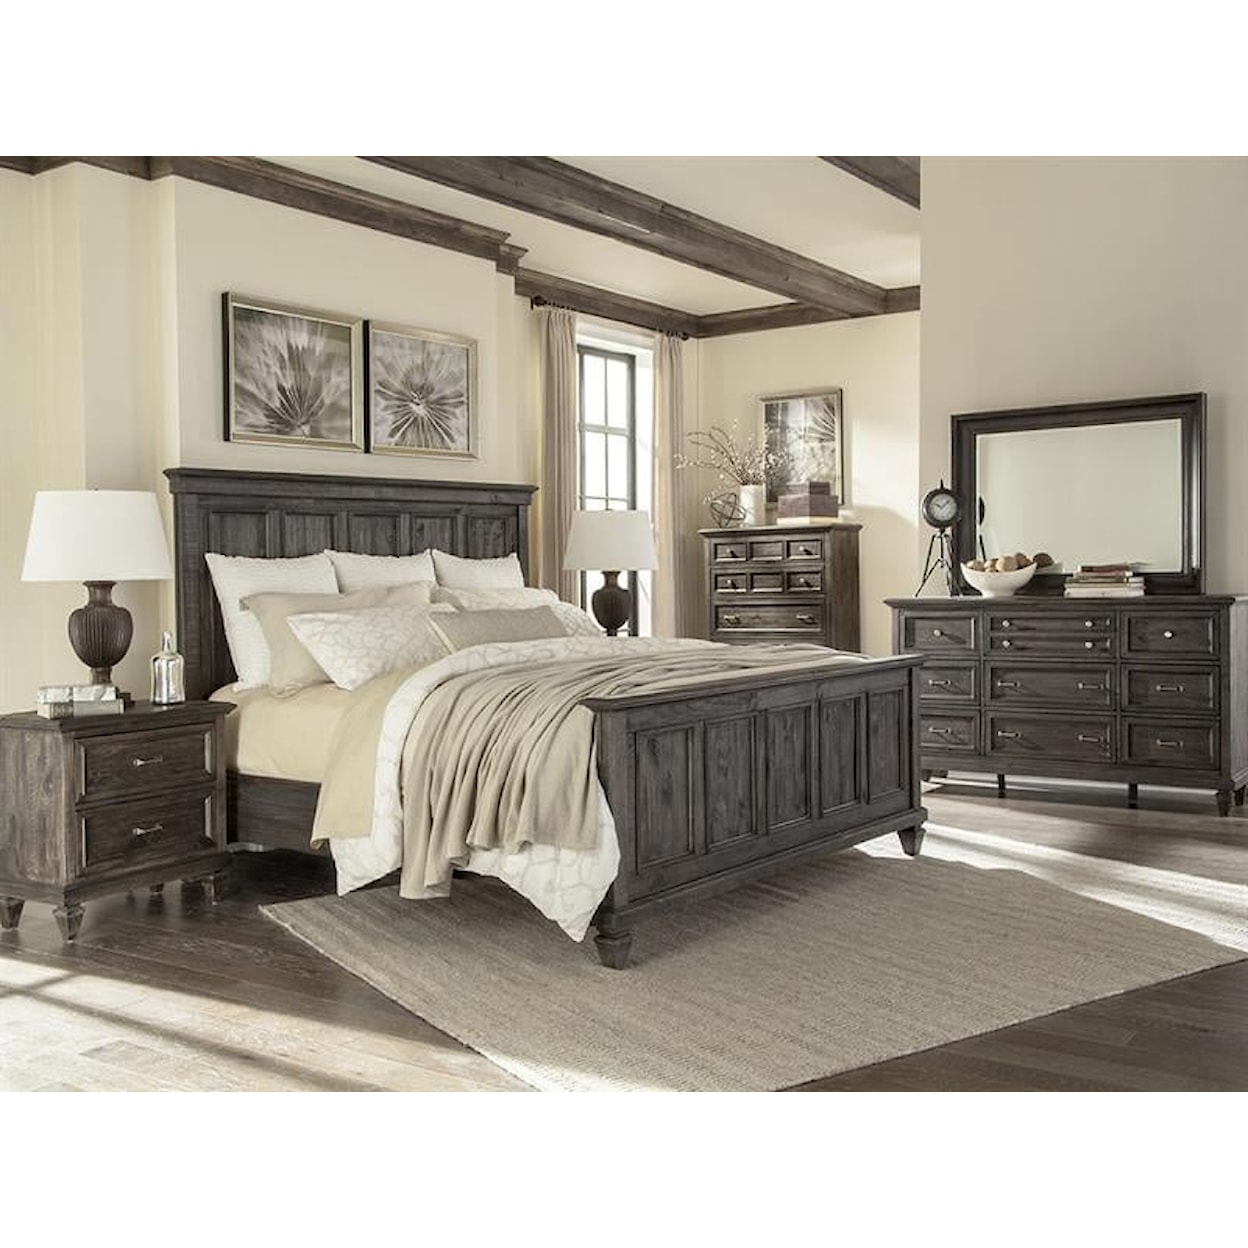 Magnussen Home Calistoga Bedroom California King Panel Bed